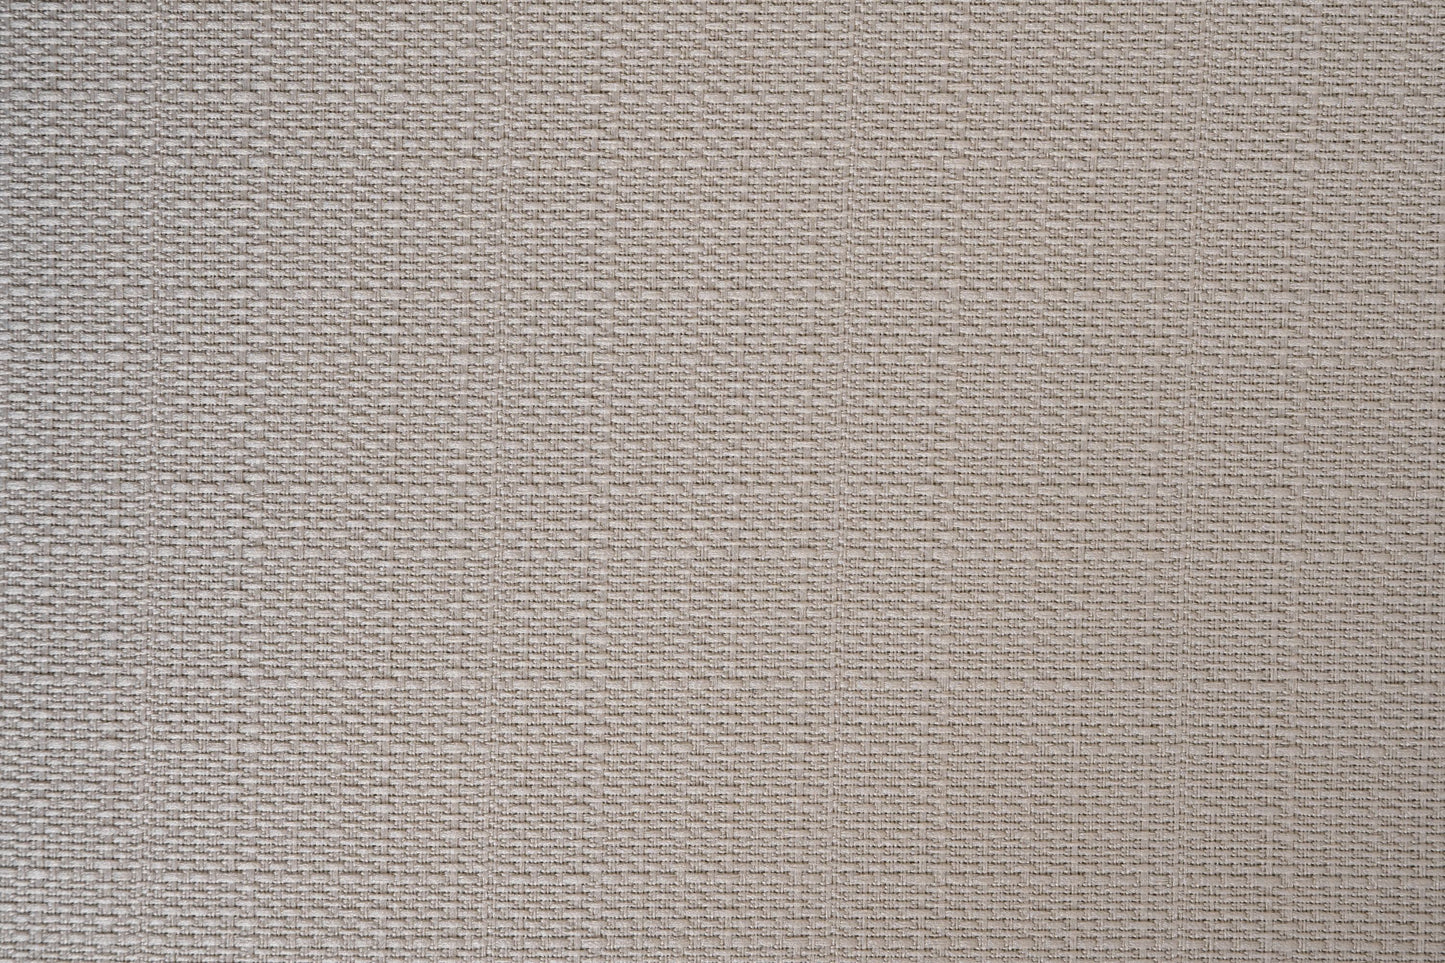 Modrest Yukon - Modern Off White Fabric & Brushed Brass Counter Chair